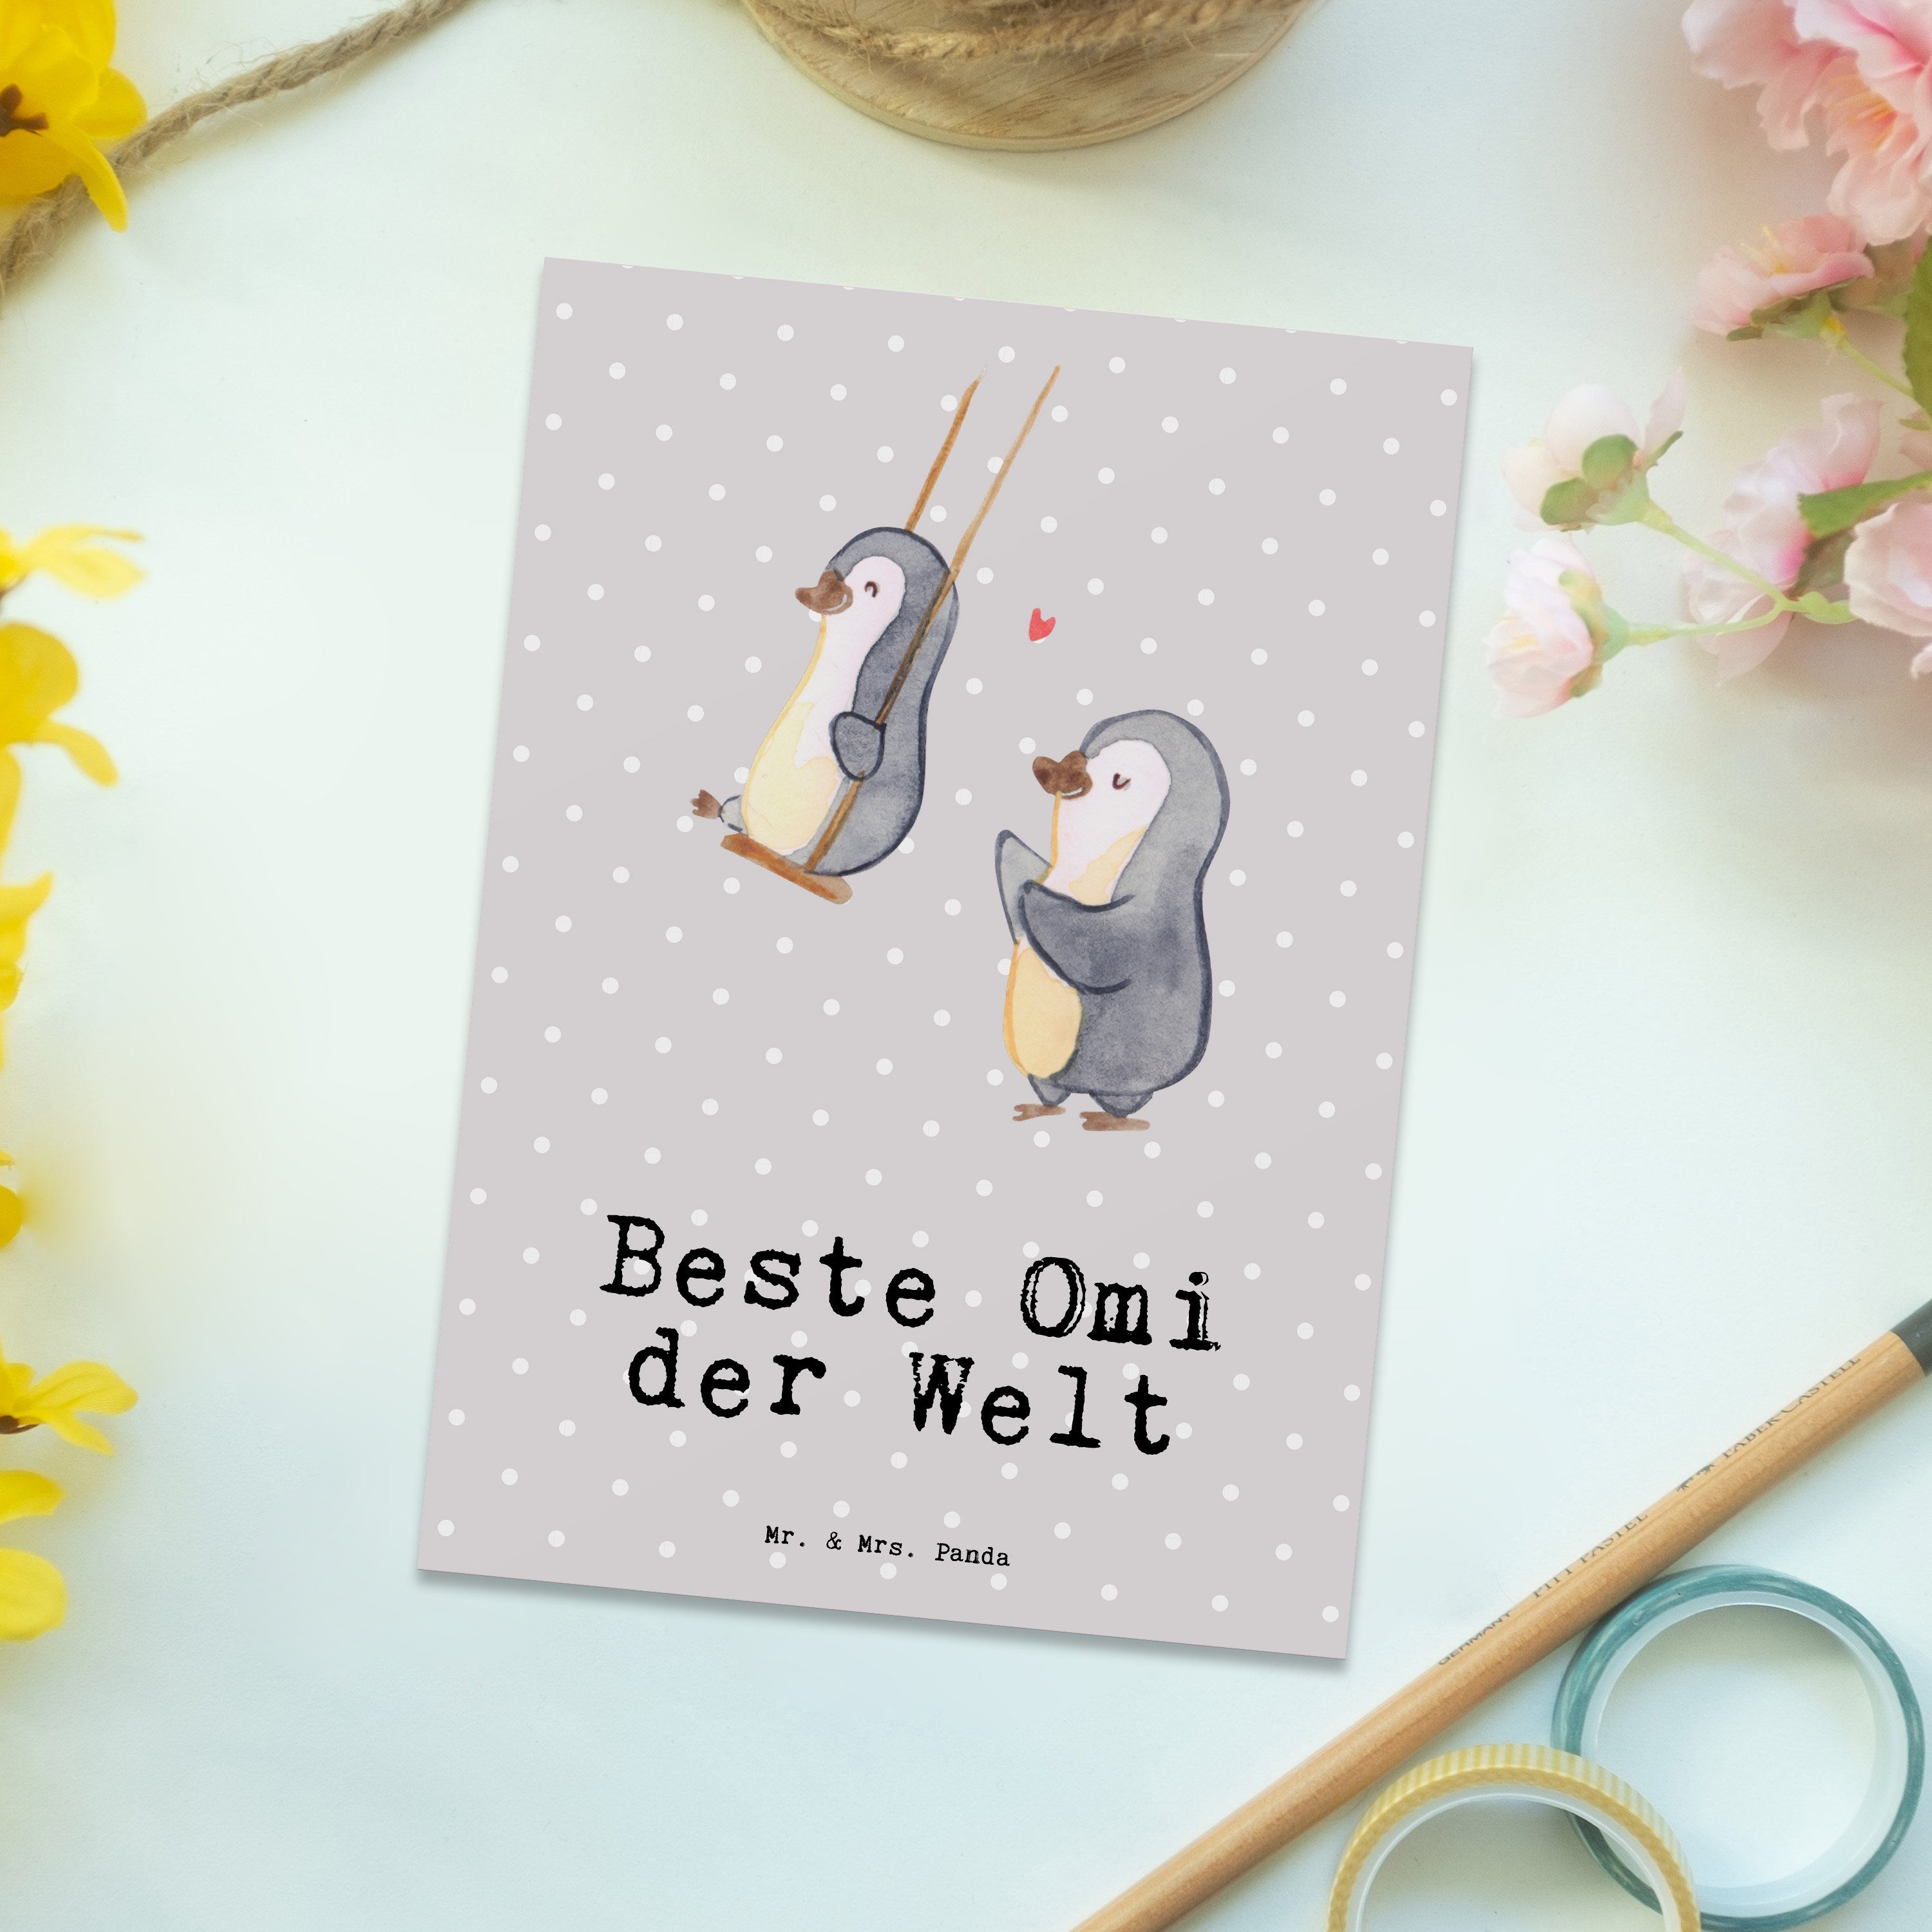 Welt Mrs. Omi Beste Geschenk, Postkarte - - Dank Mr. & Pinguin Pastell der Panda Grau Grußkarte,